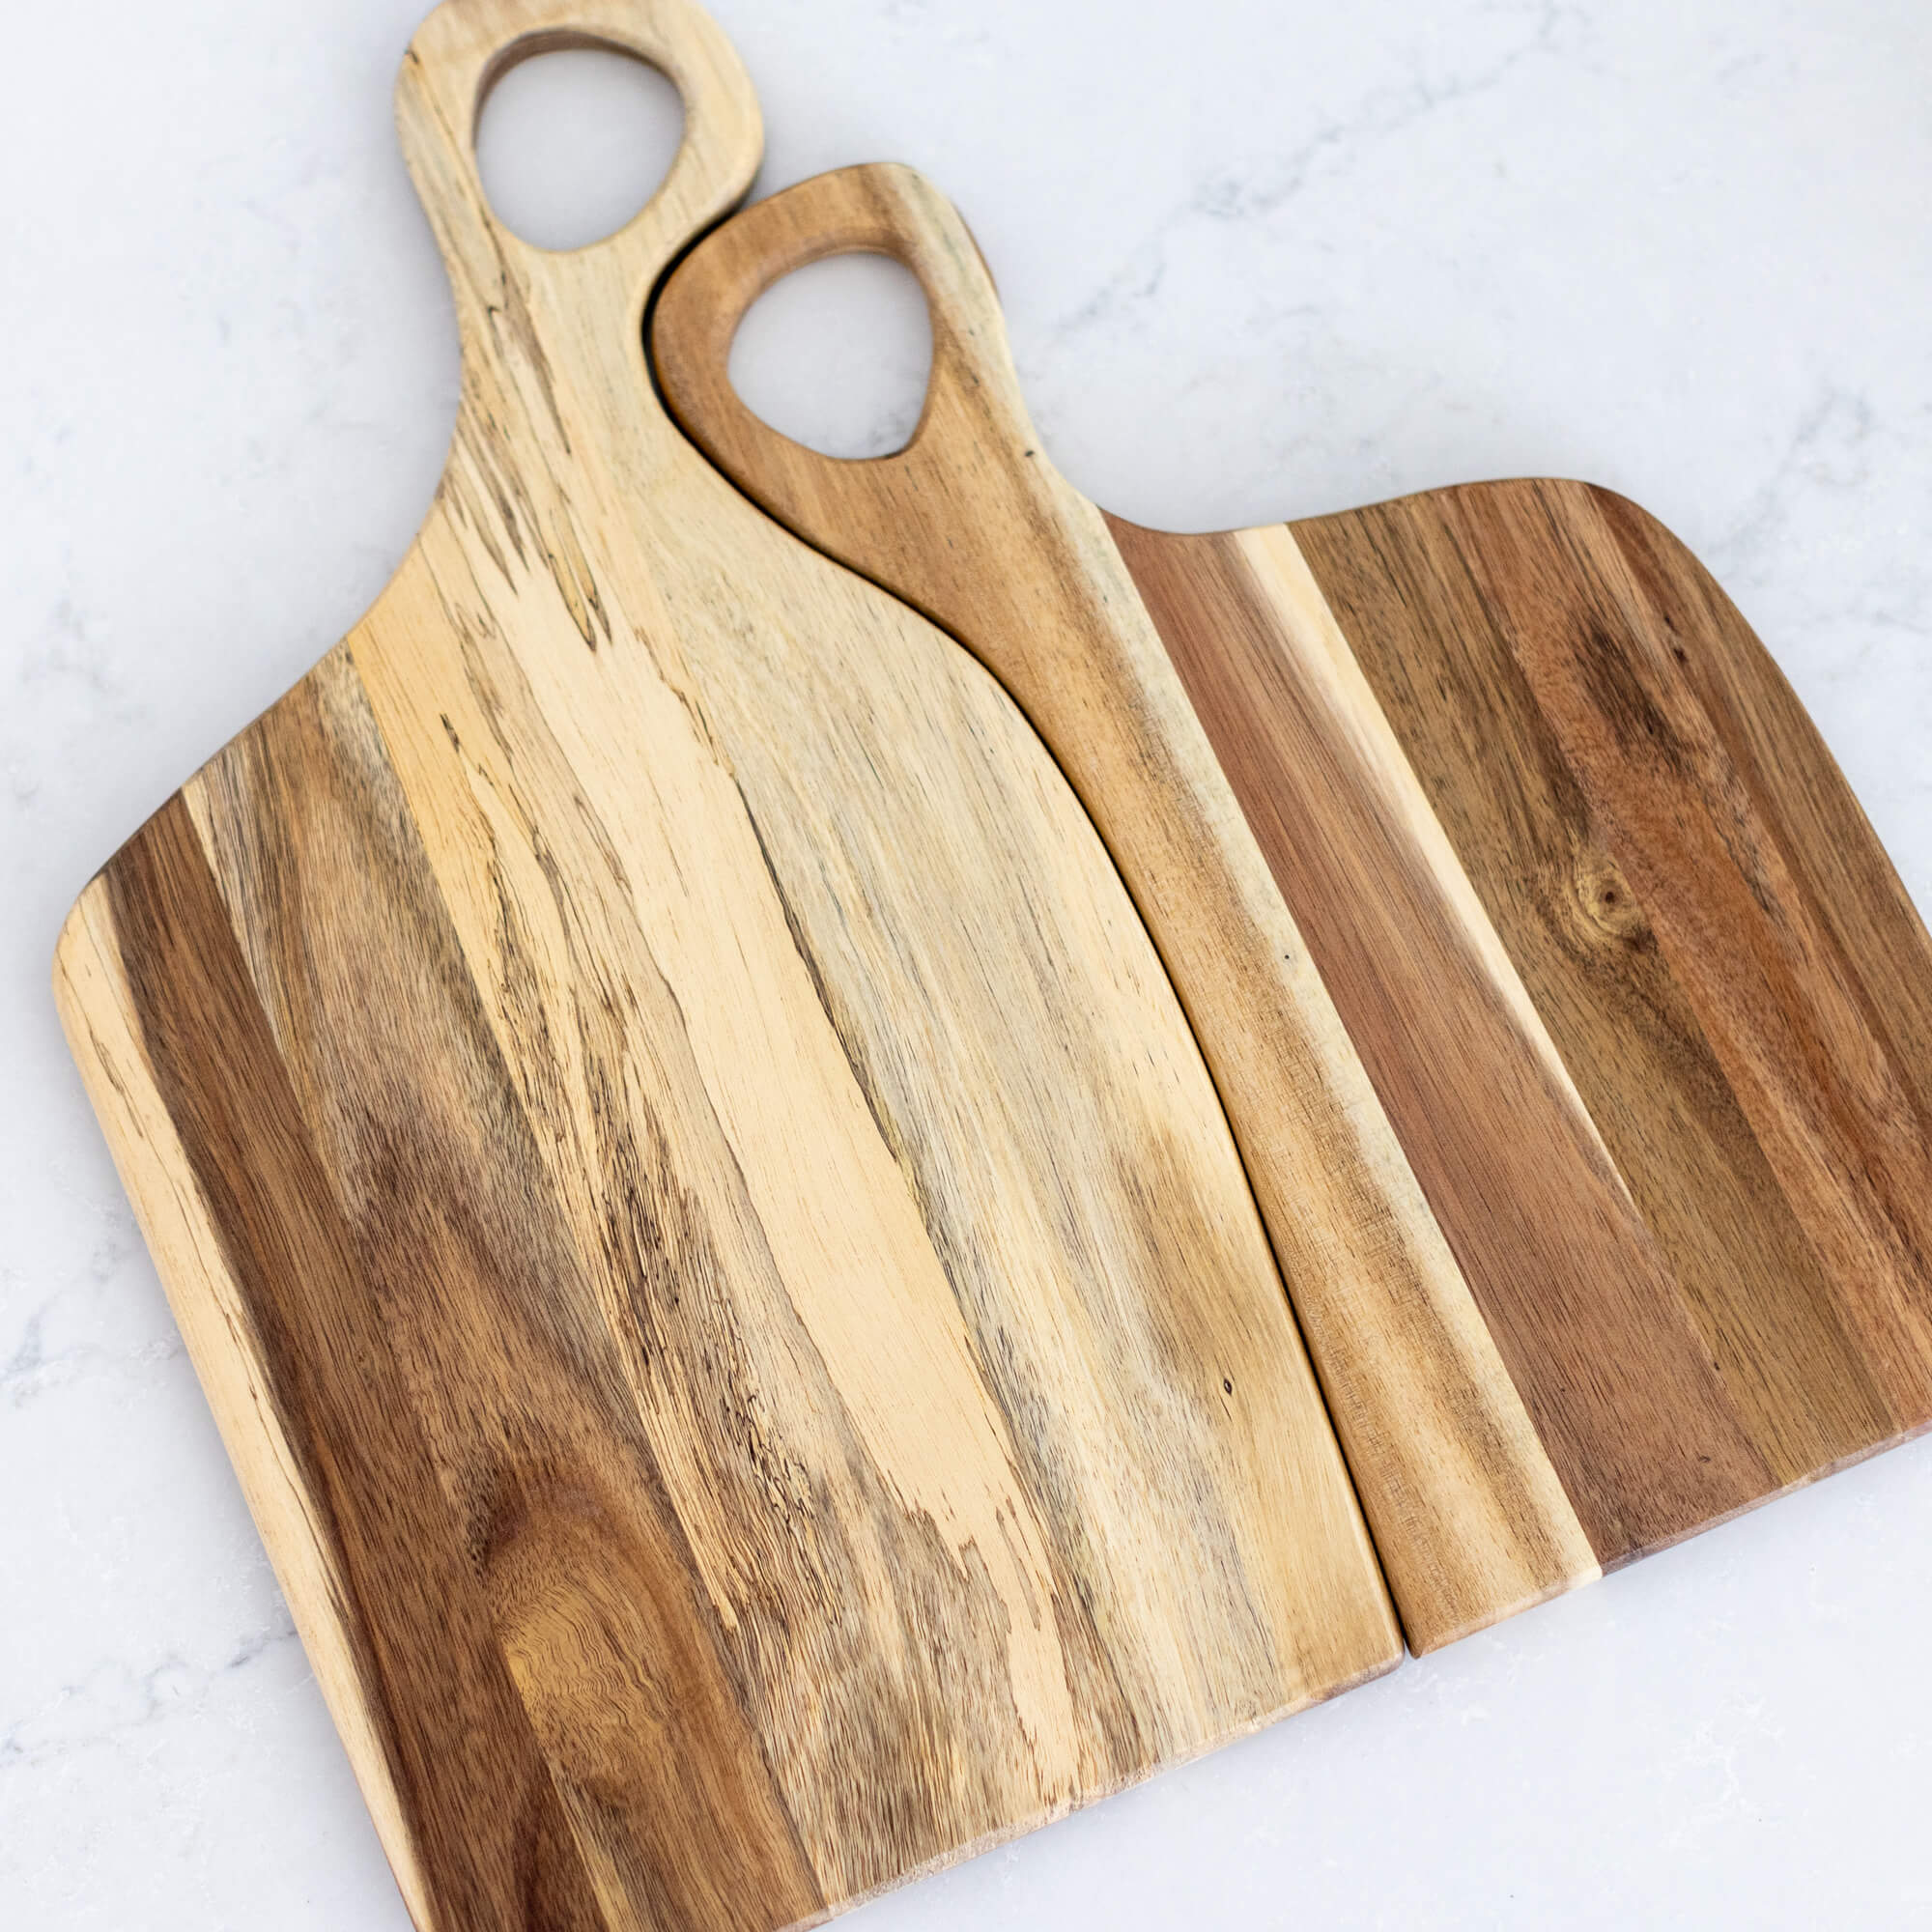 Custom Wood Cutting Board - Engraved Nested Cutting Board for Mom